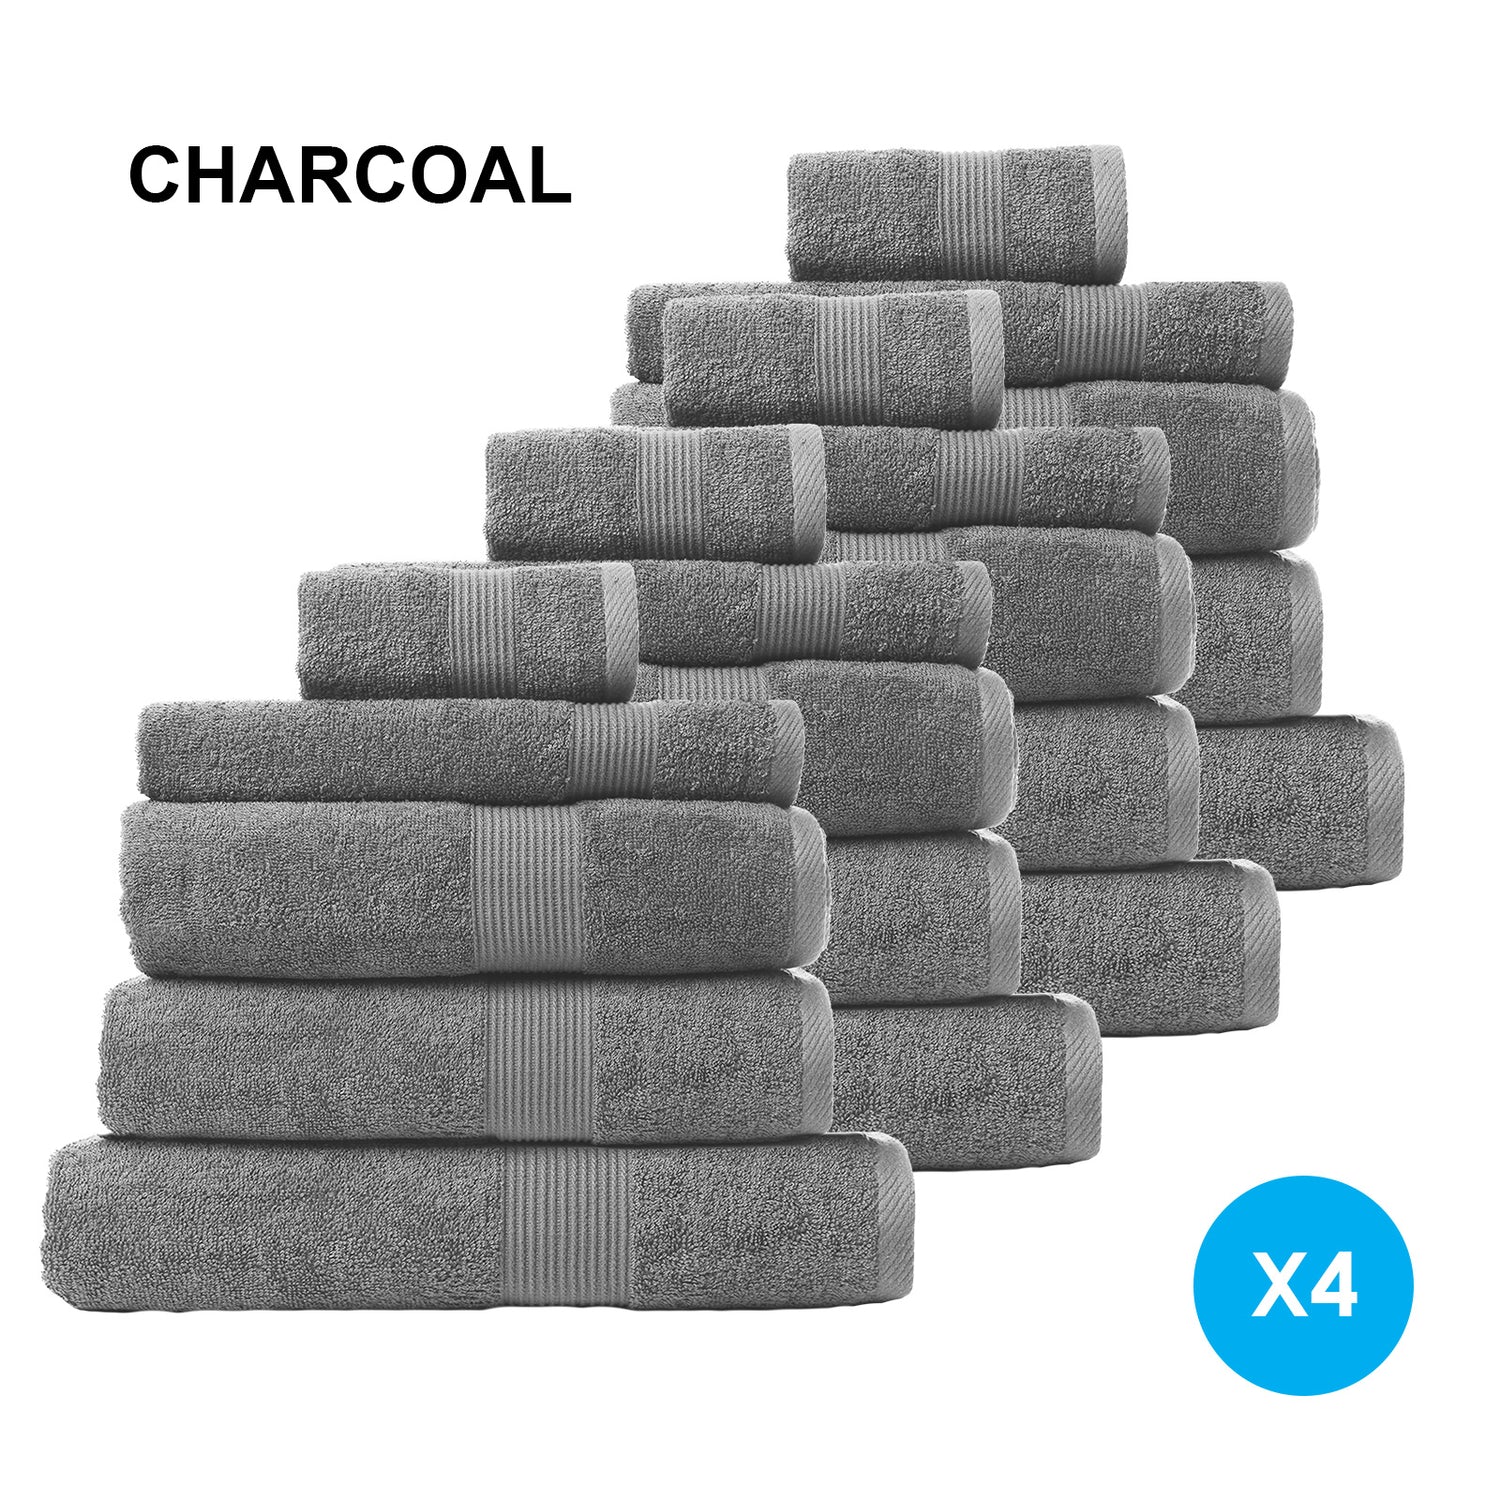 Royal Comfort Cotton Bamboo Towel Bundle Set 450GSM Luxurious Absorbent - 20 pcs-Towels-PEROZ Accessories